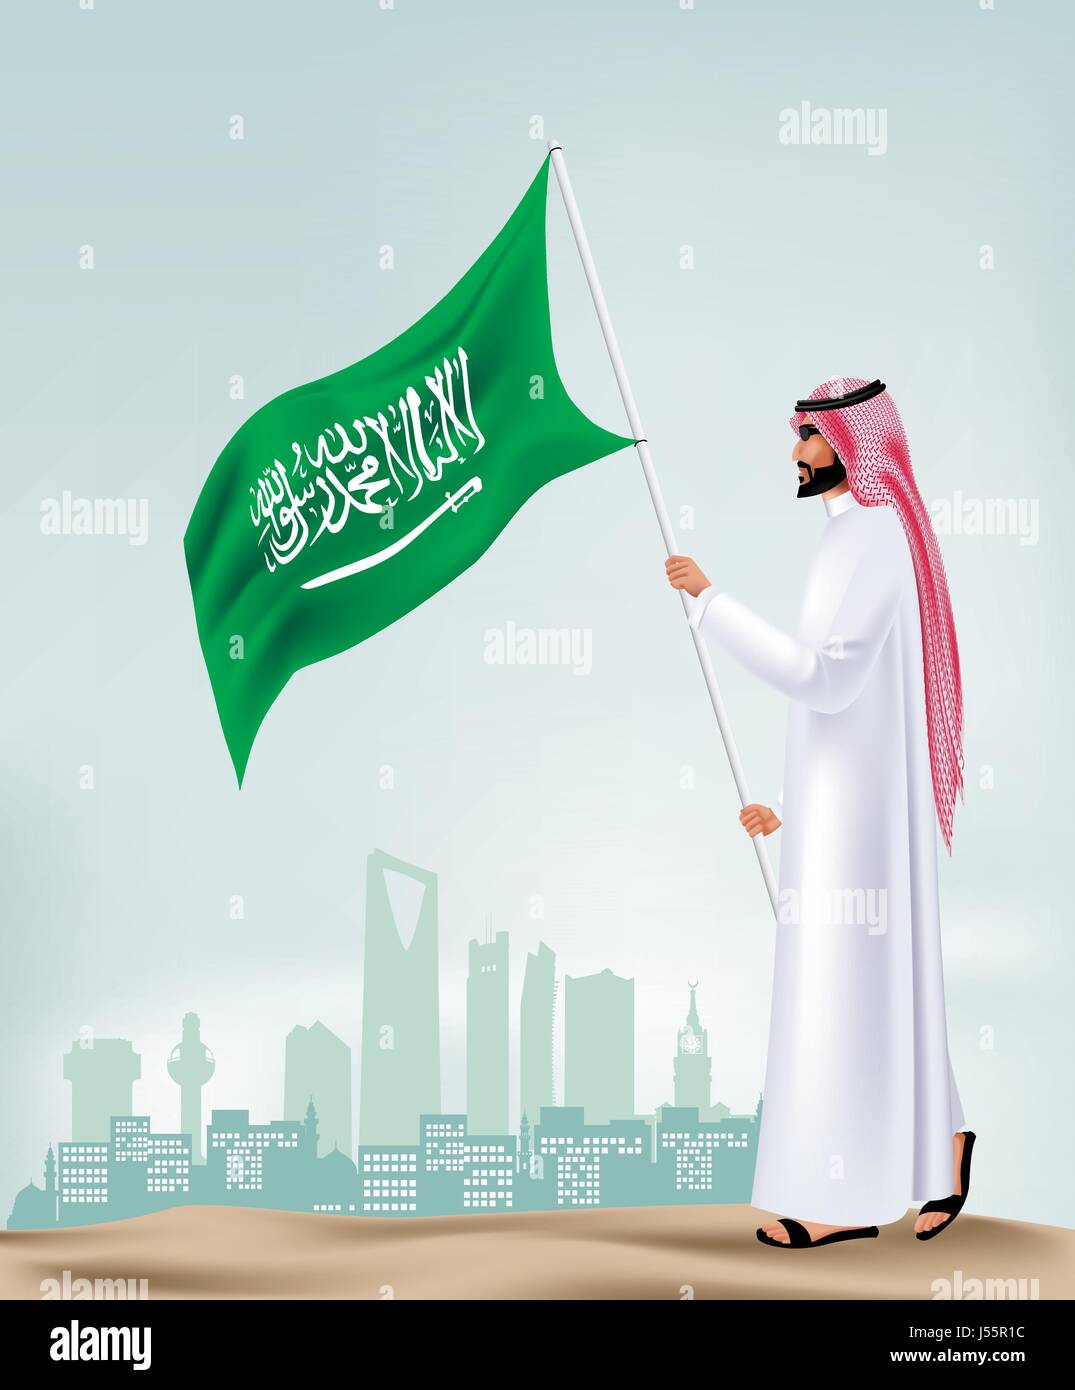 Saudi Arabia Man Holding Flag in the City. Editable Vector Illustration Stock Vector